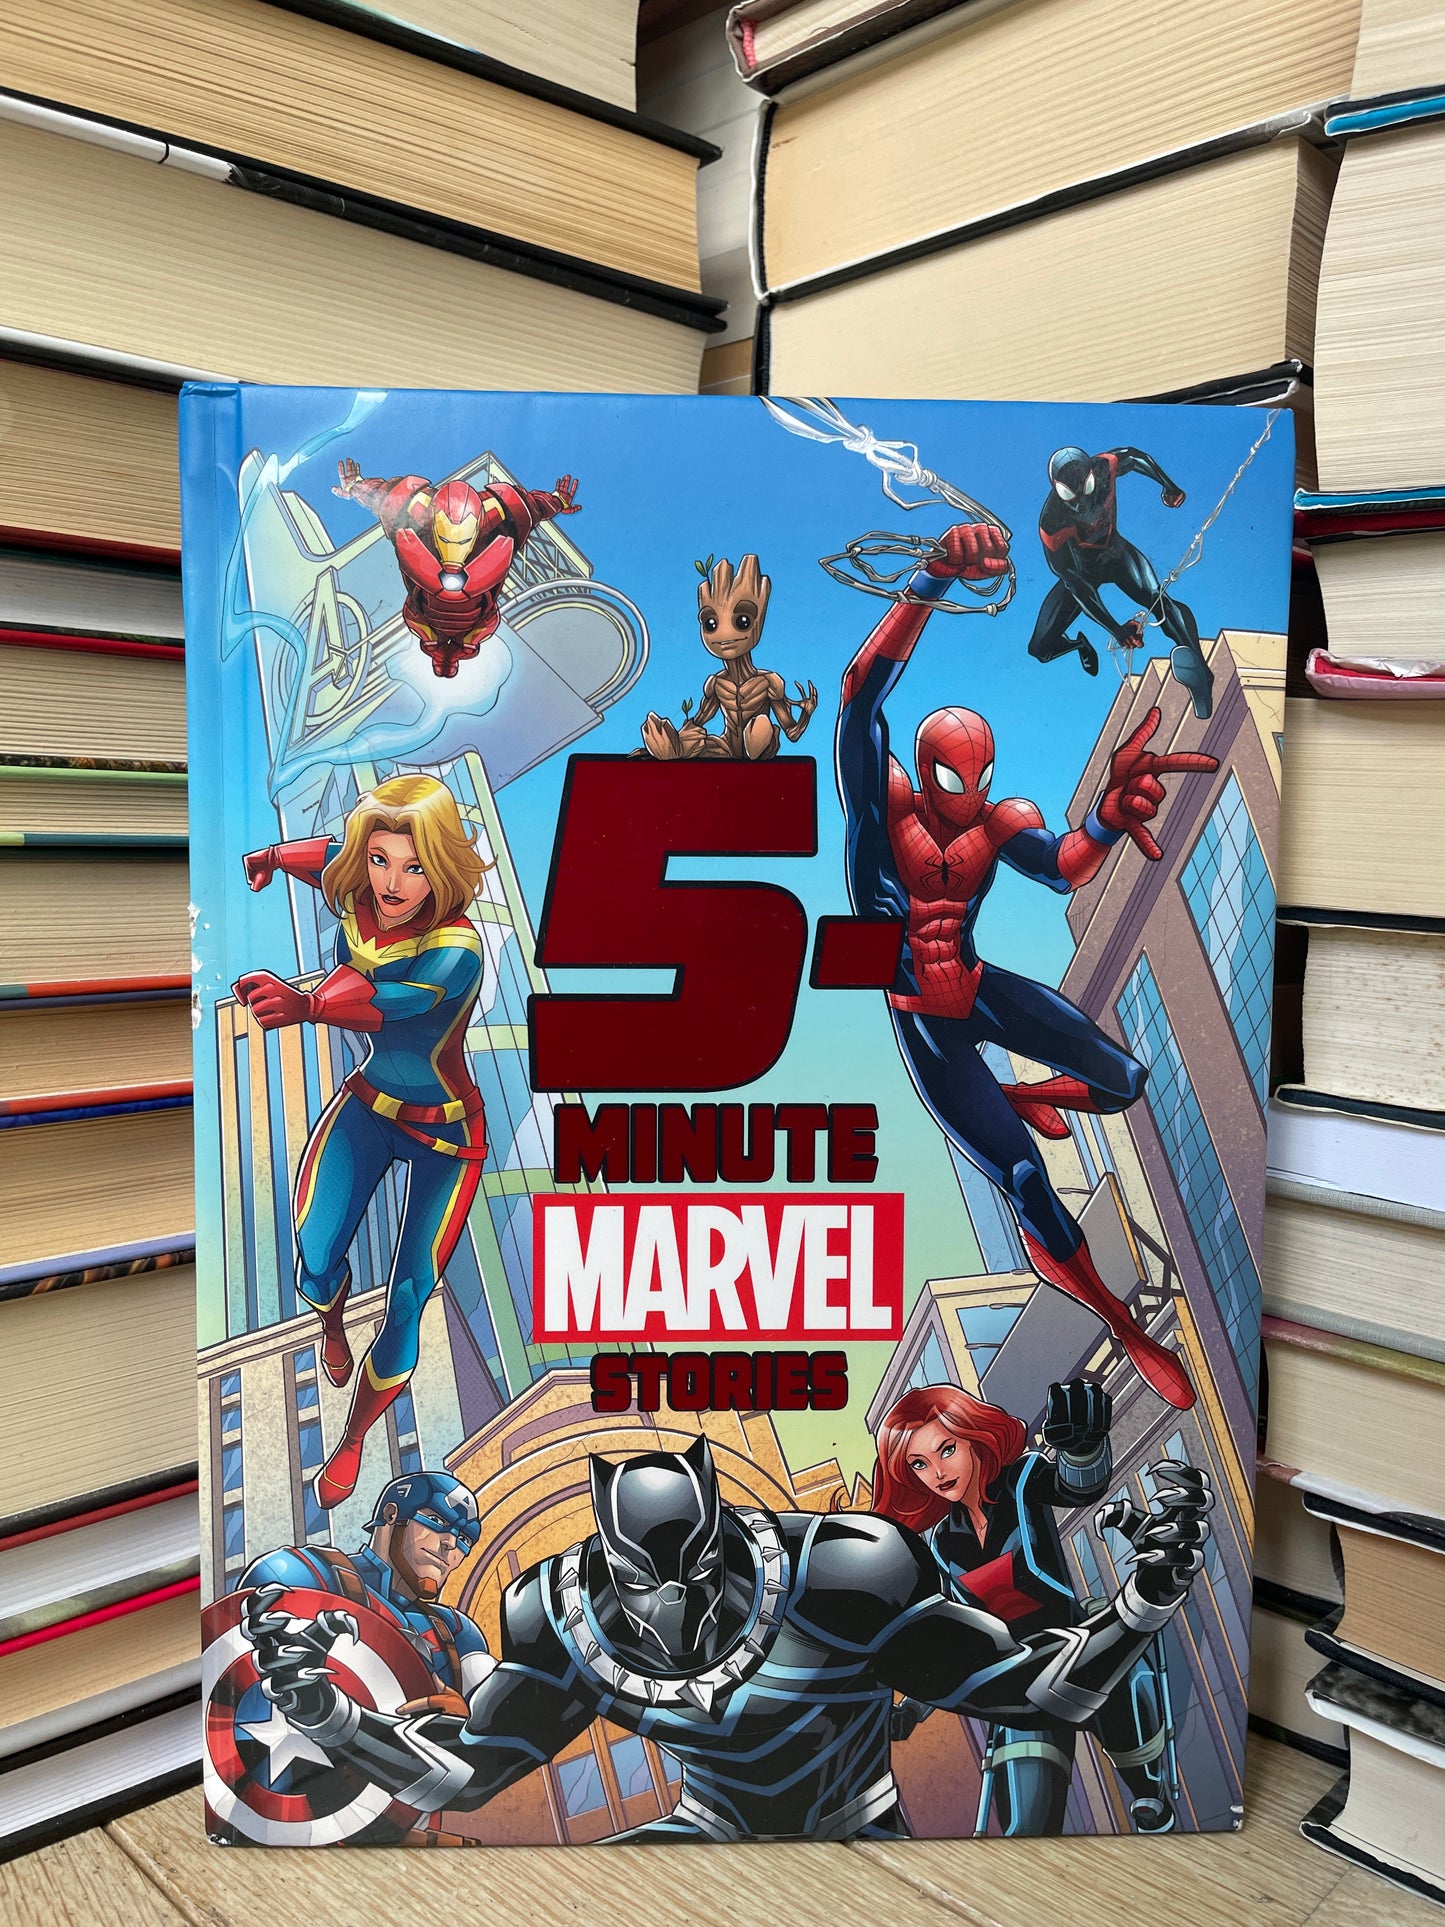 Marvel - 5-Minute Stories